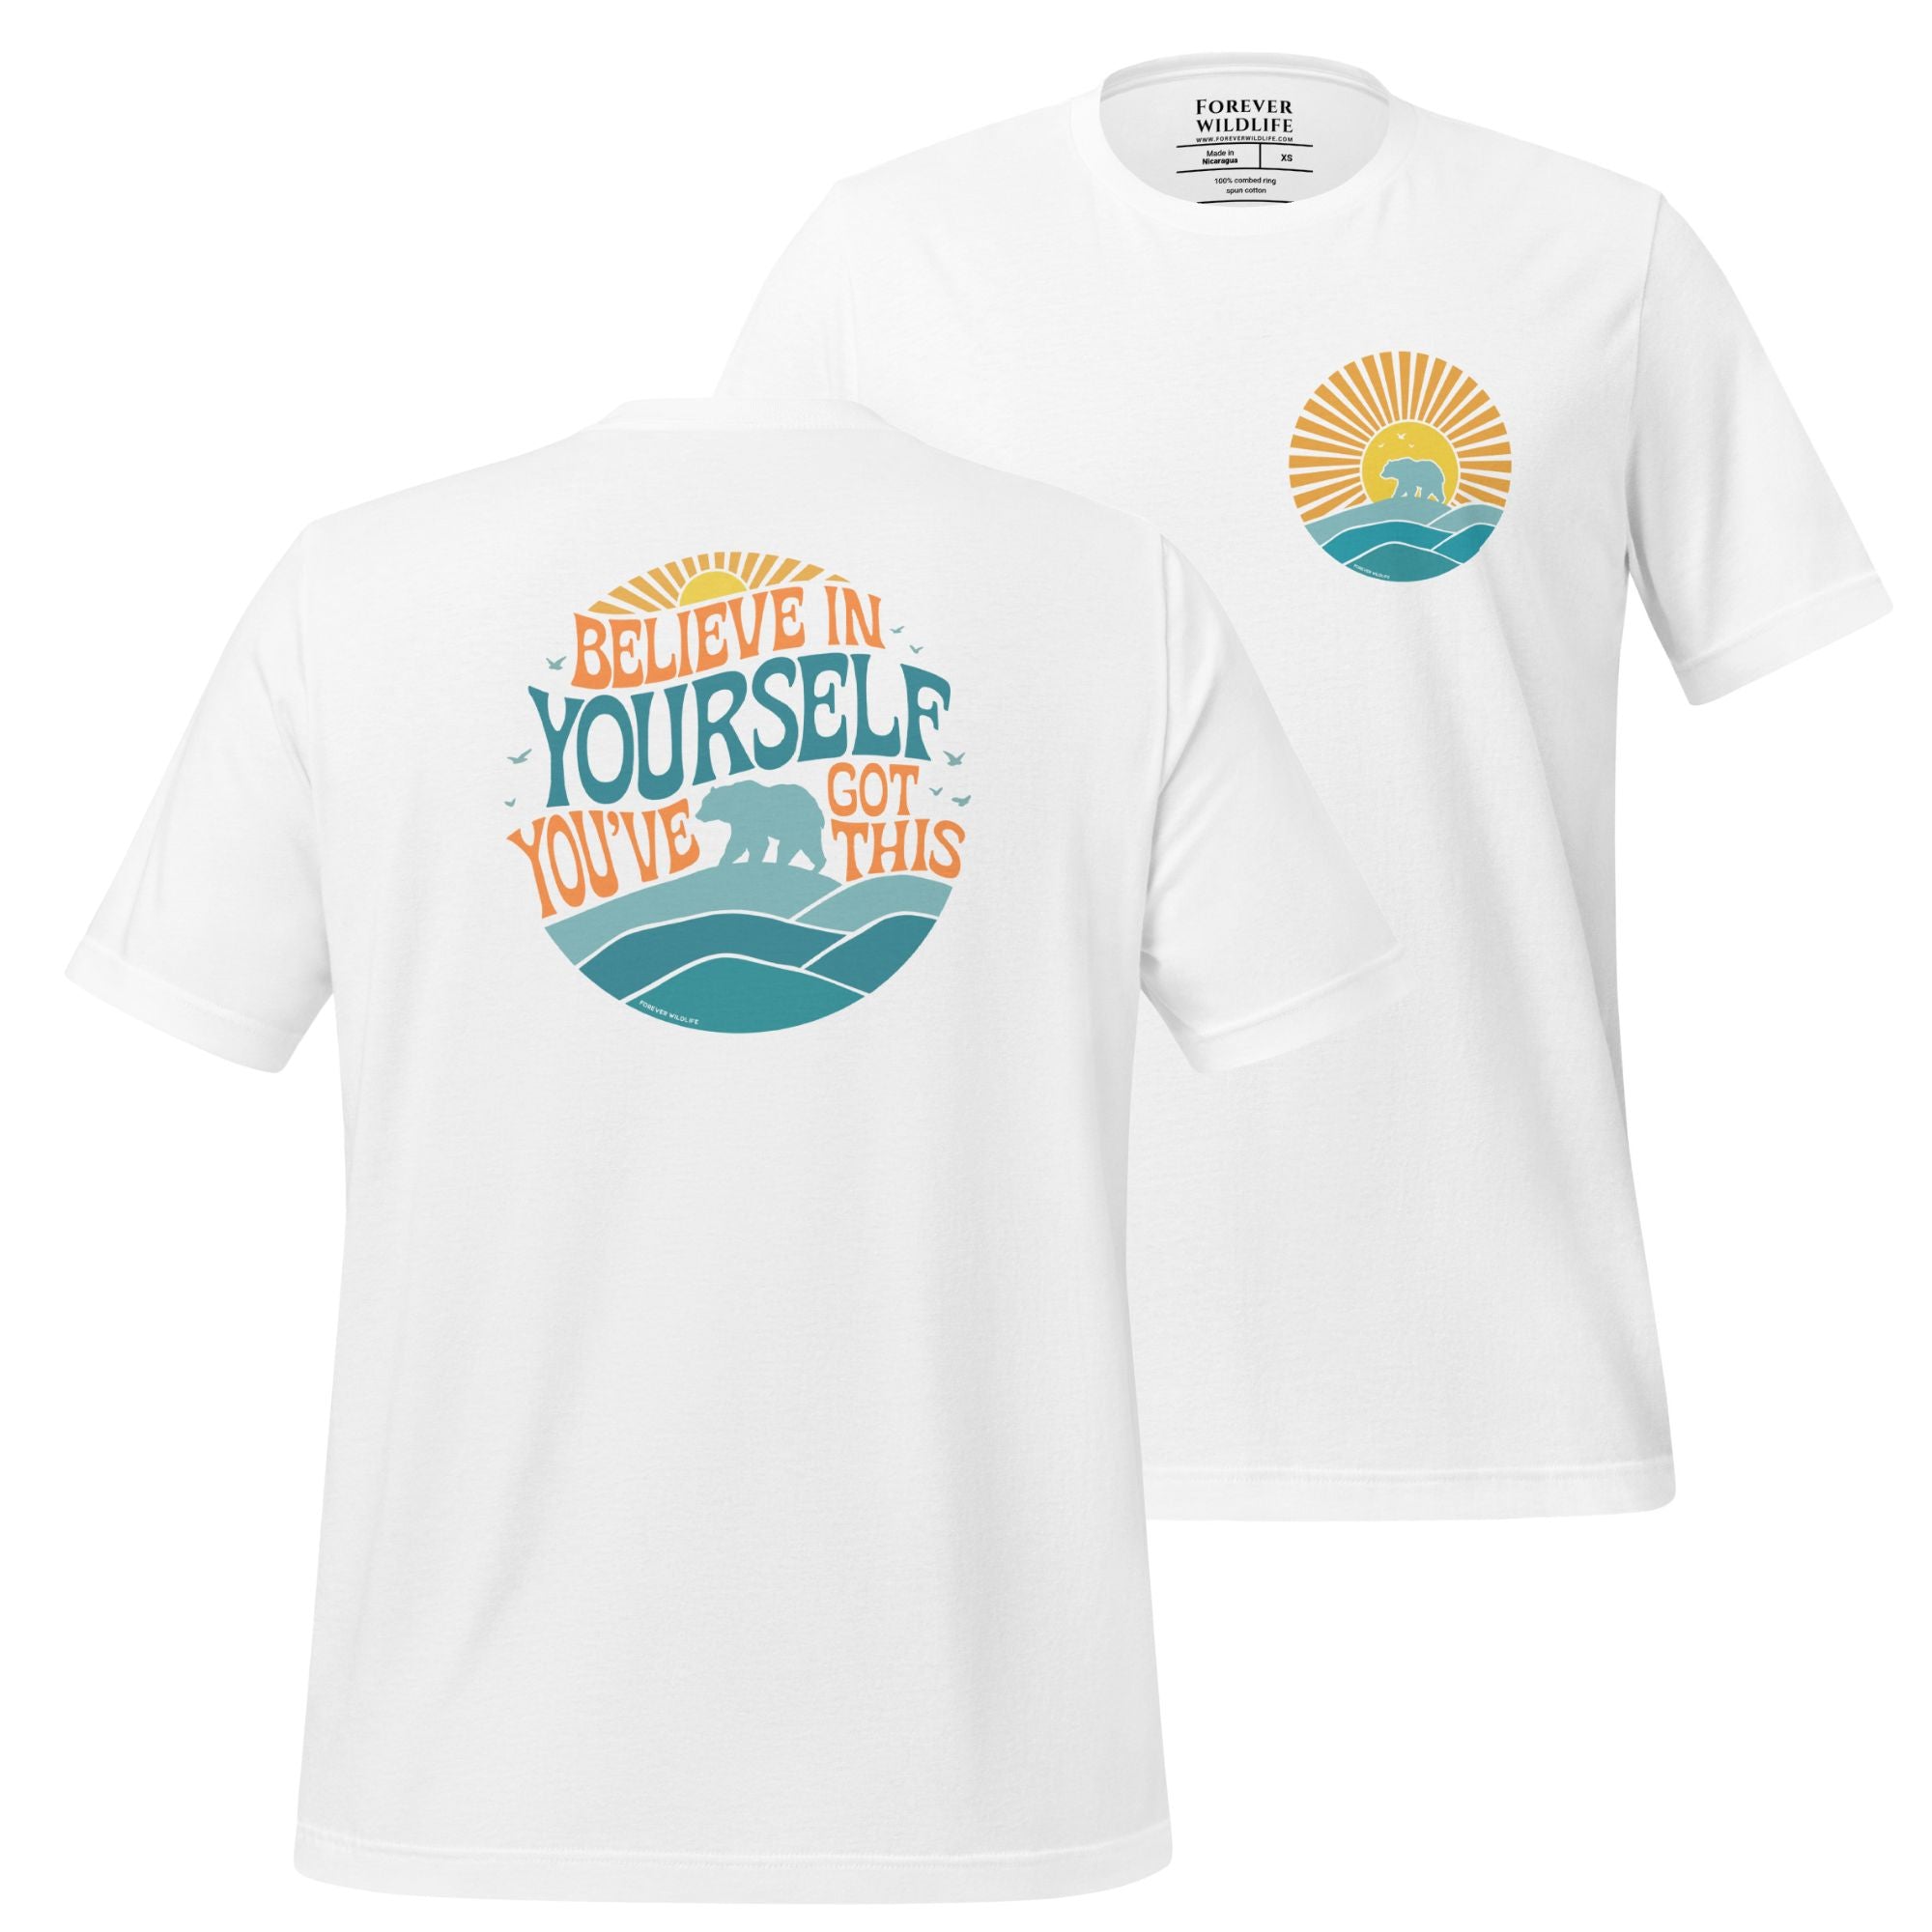 Polar Bear T-shirt in White, Premium Wildlife Animal Inspirational T-shirt Design, part of Wildlife T-Shirts & Clothing from Forever Wildlife.